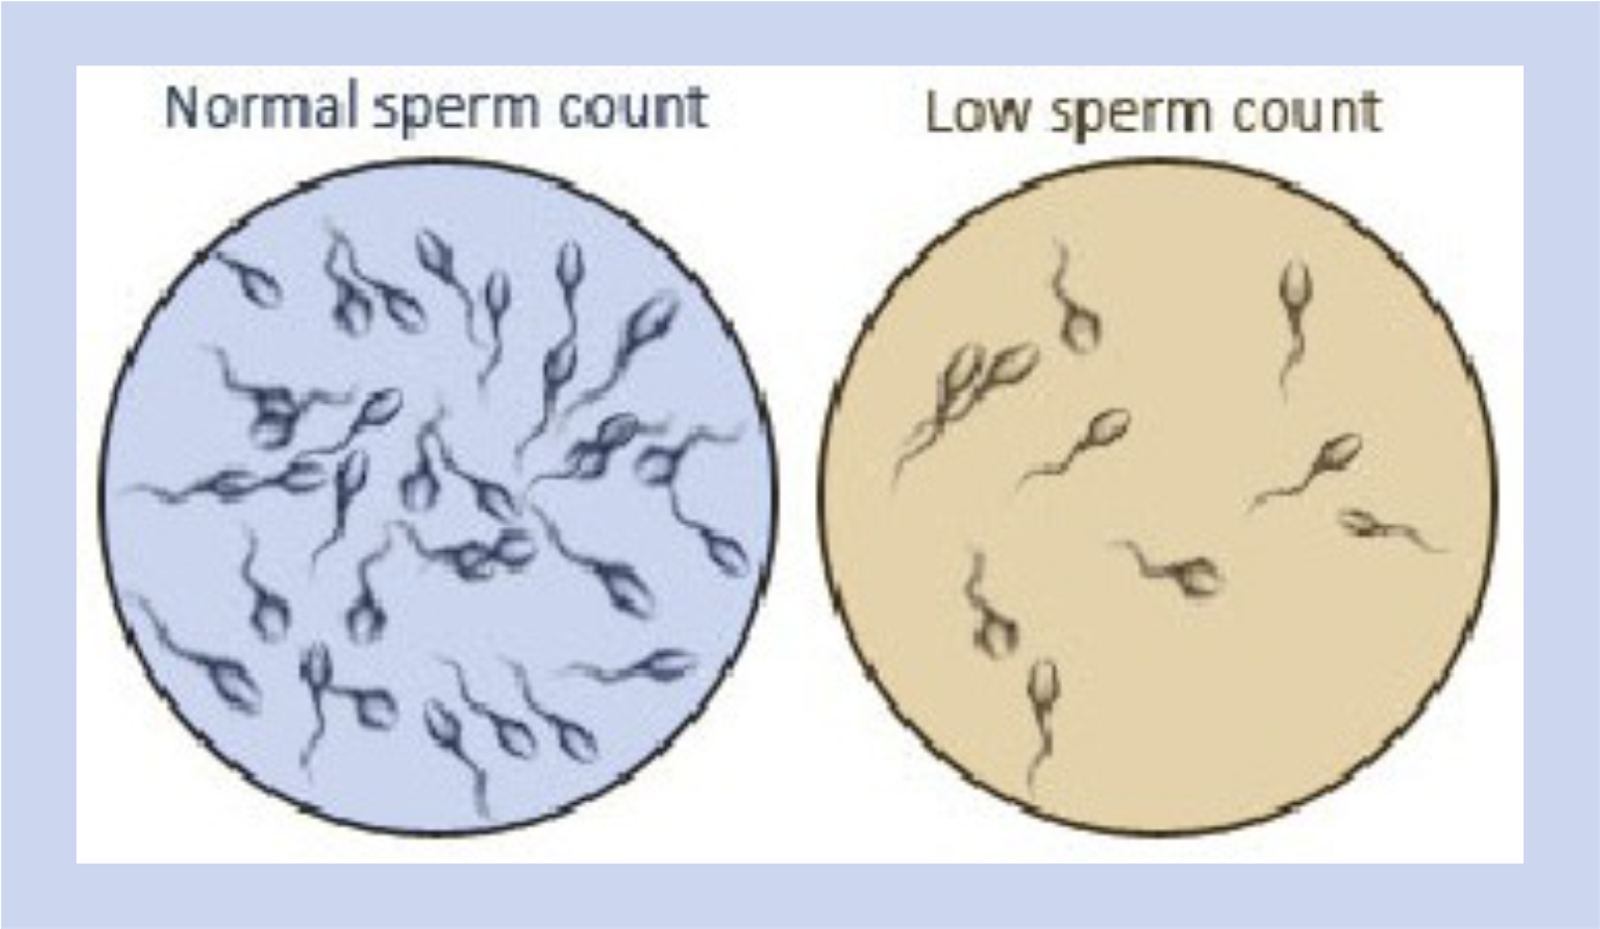 Low sperm count symptoms - Nude photos